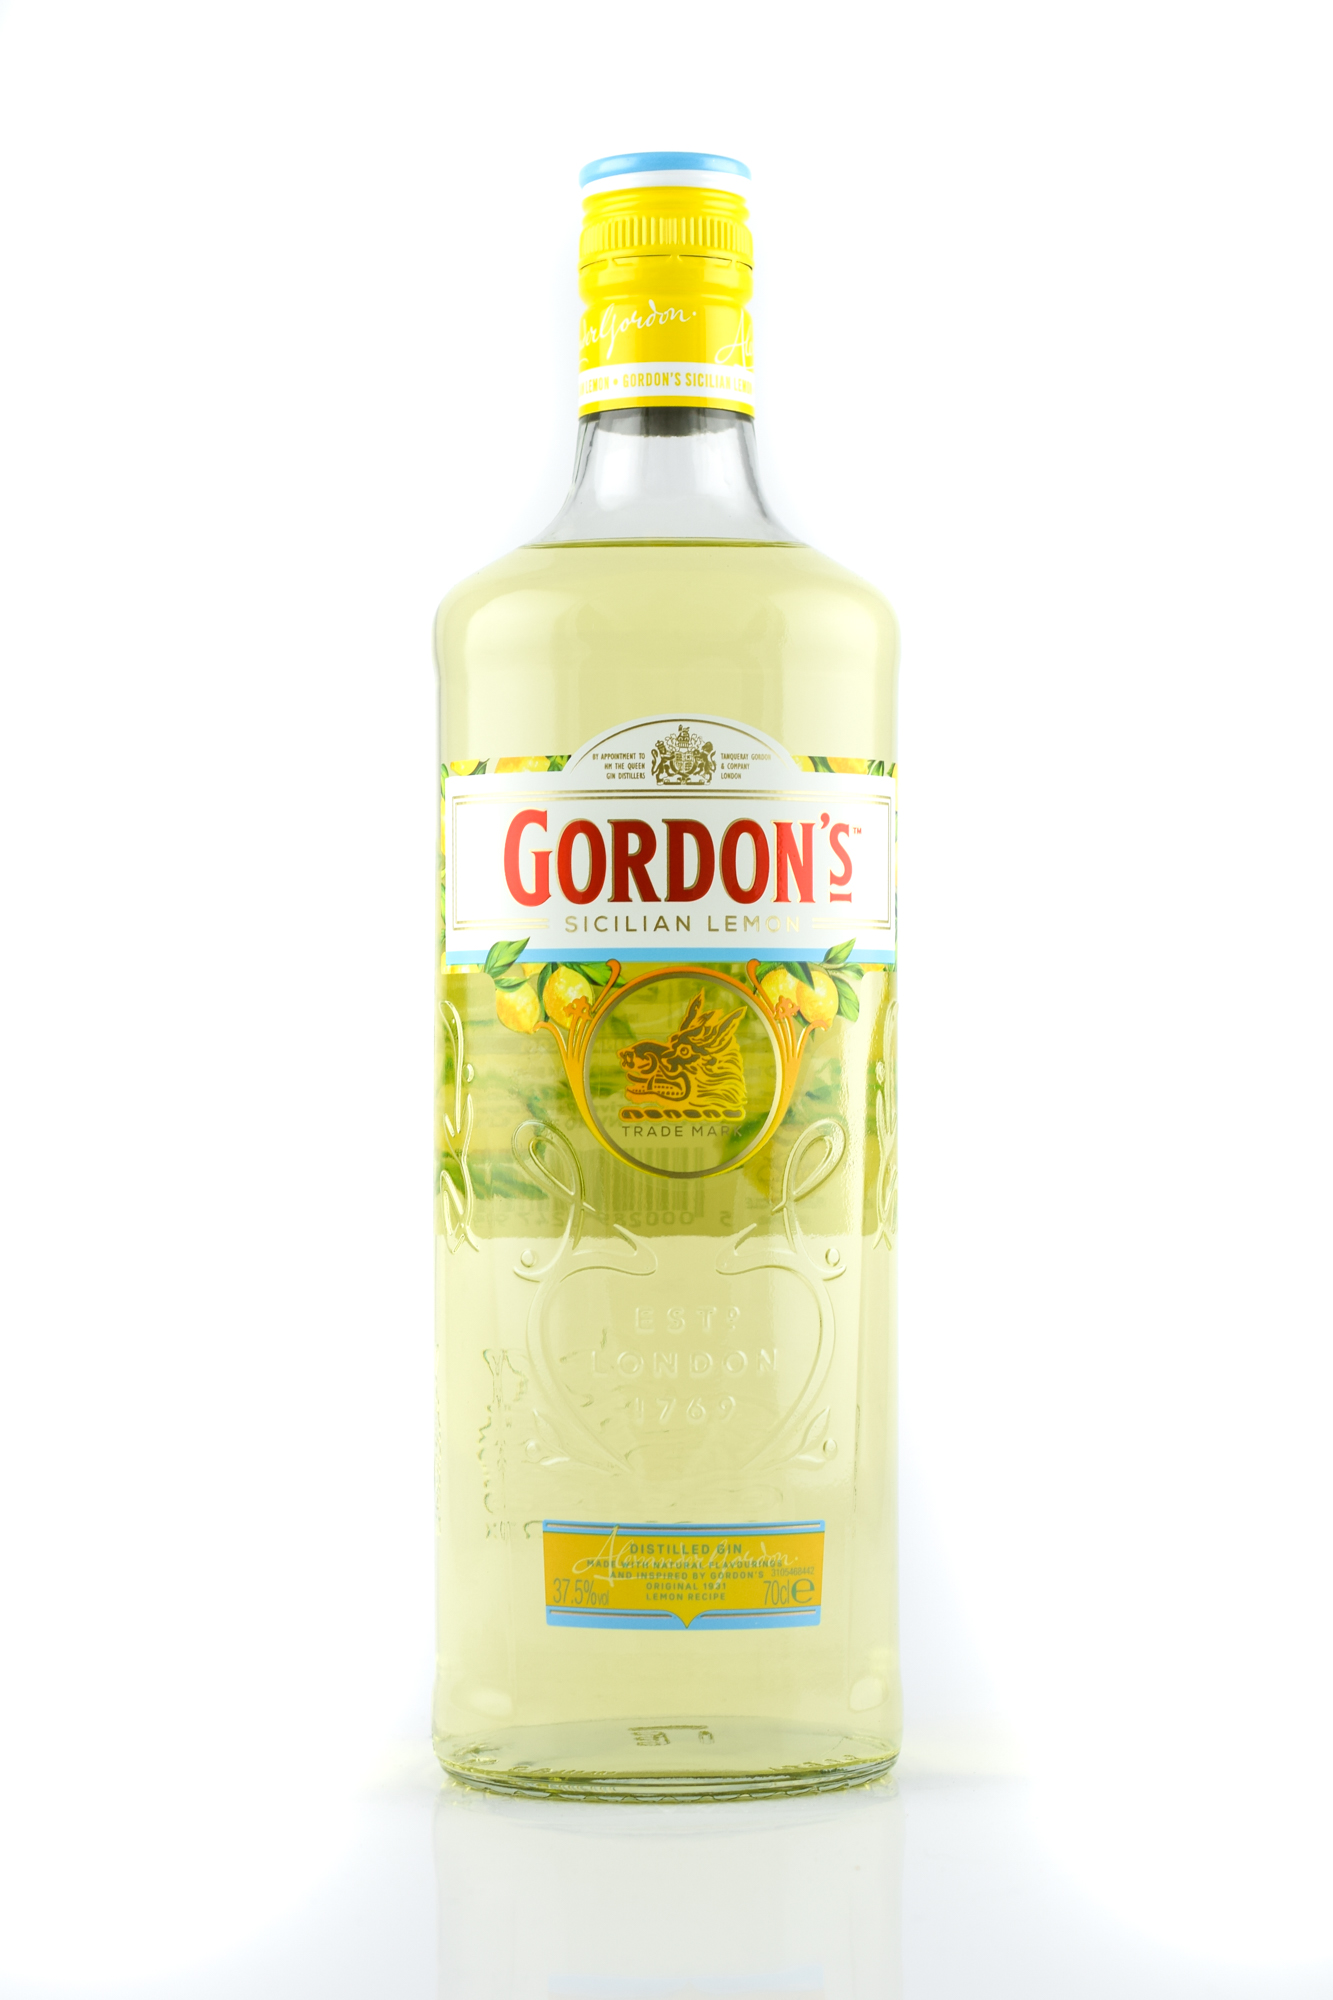 Gordon's London Dry Gin 0.7l, Alc. 37.5 vol.%, Gin England